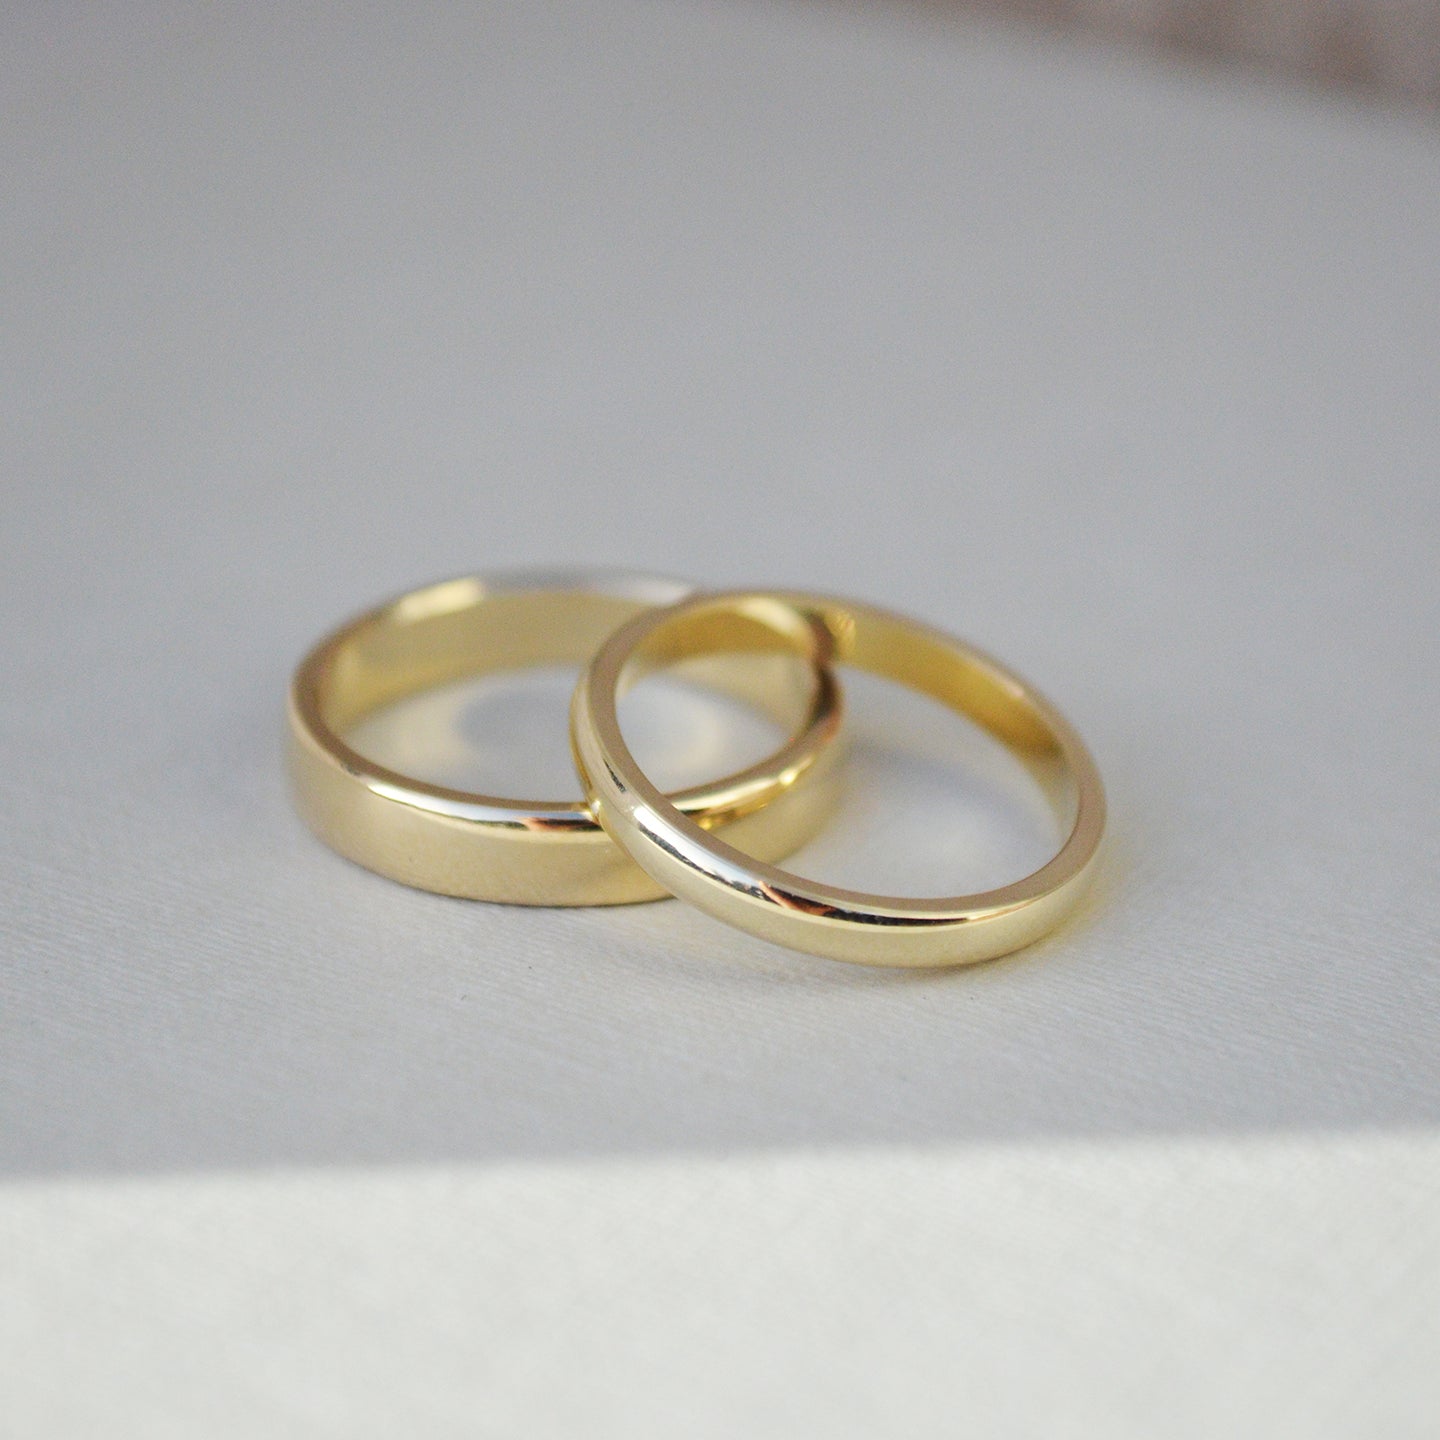 Sustainable wedding rings